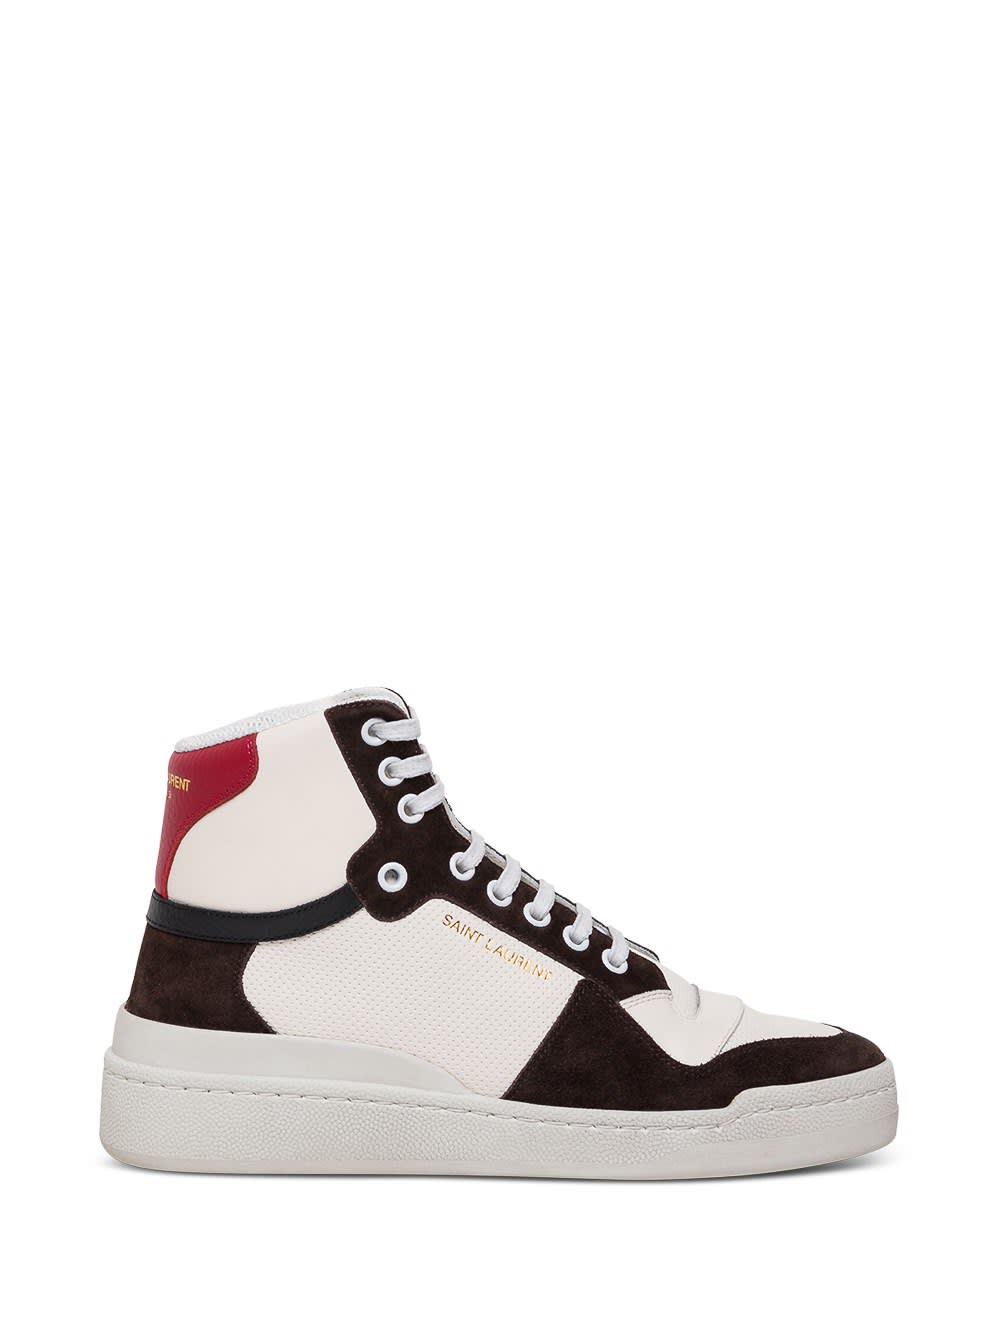 Saint Laurent Sl24 Sneakers In Multicolor Leather